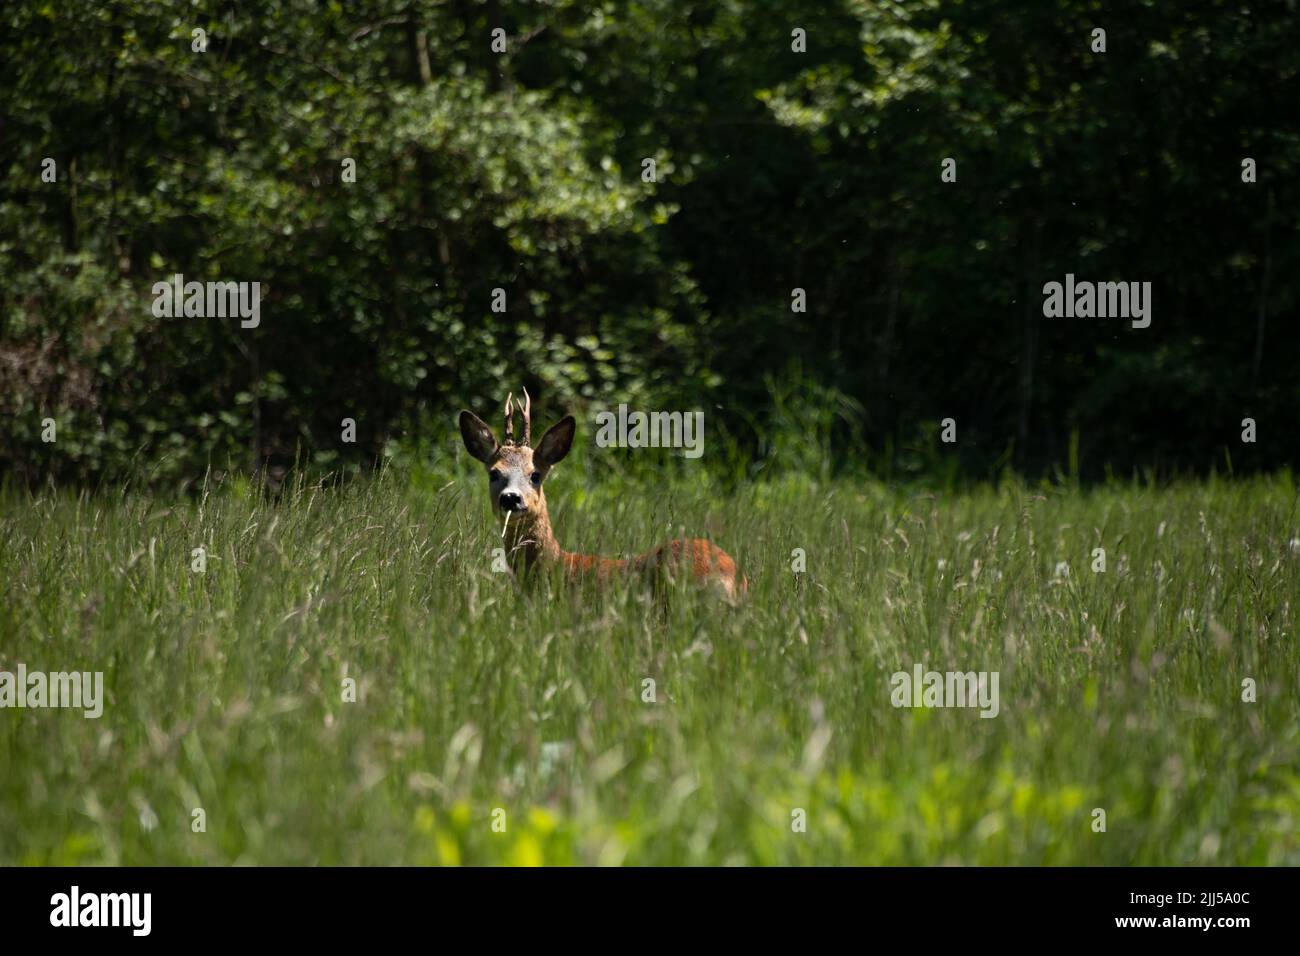 Deer in the wild eating Stock Photo